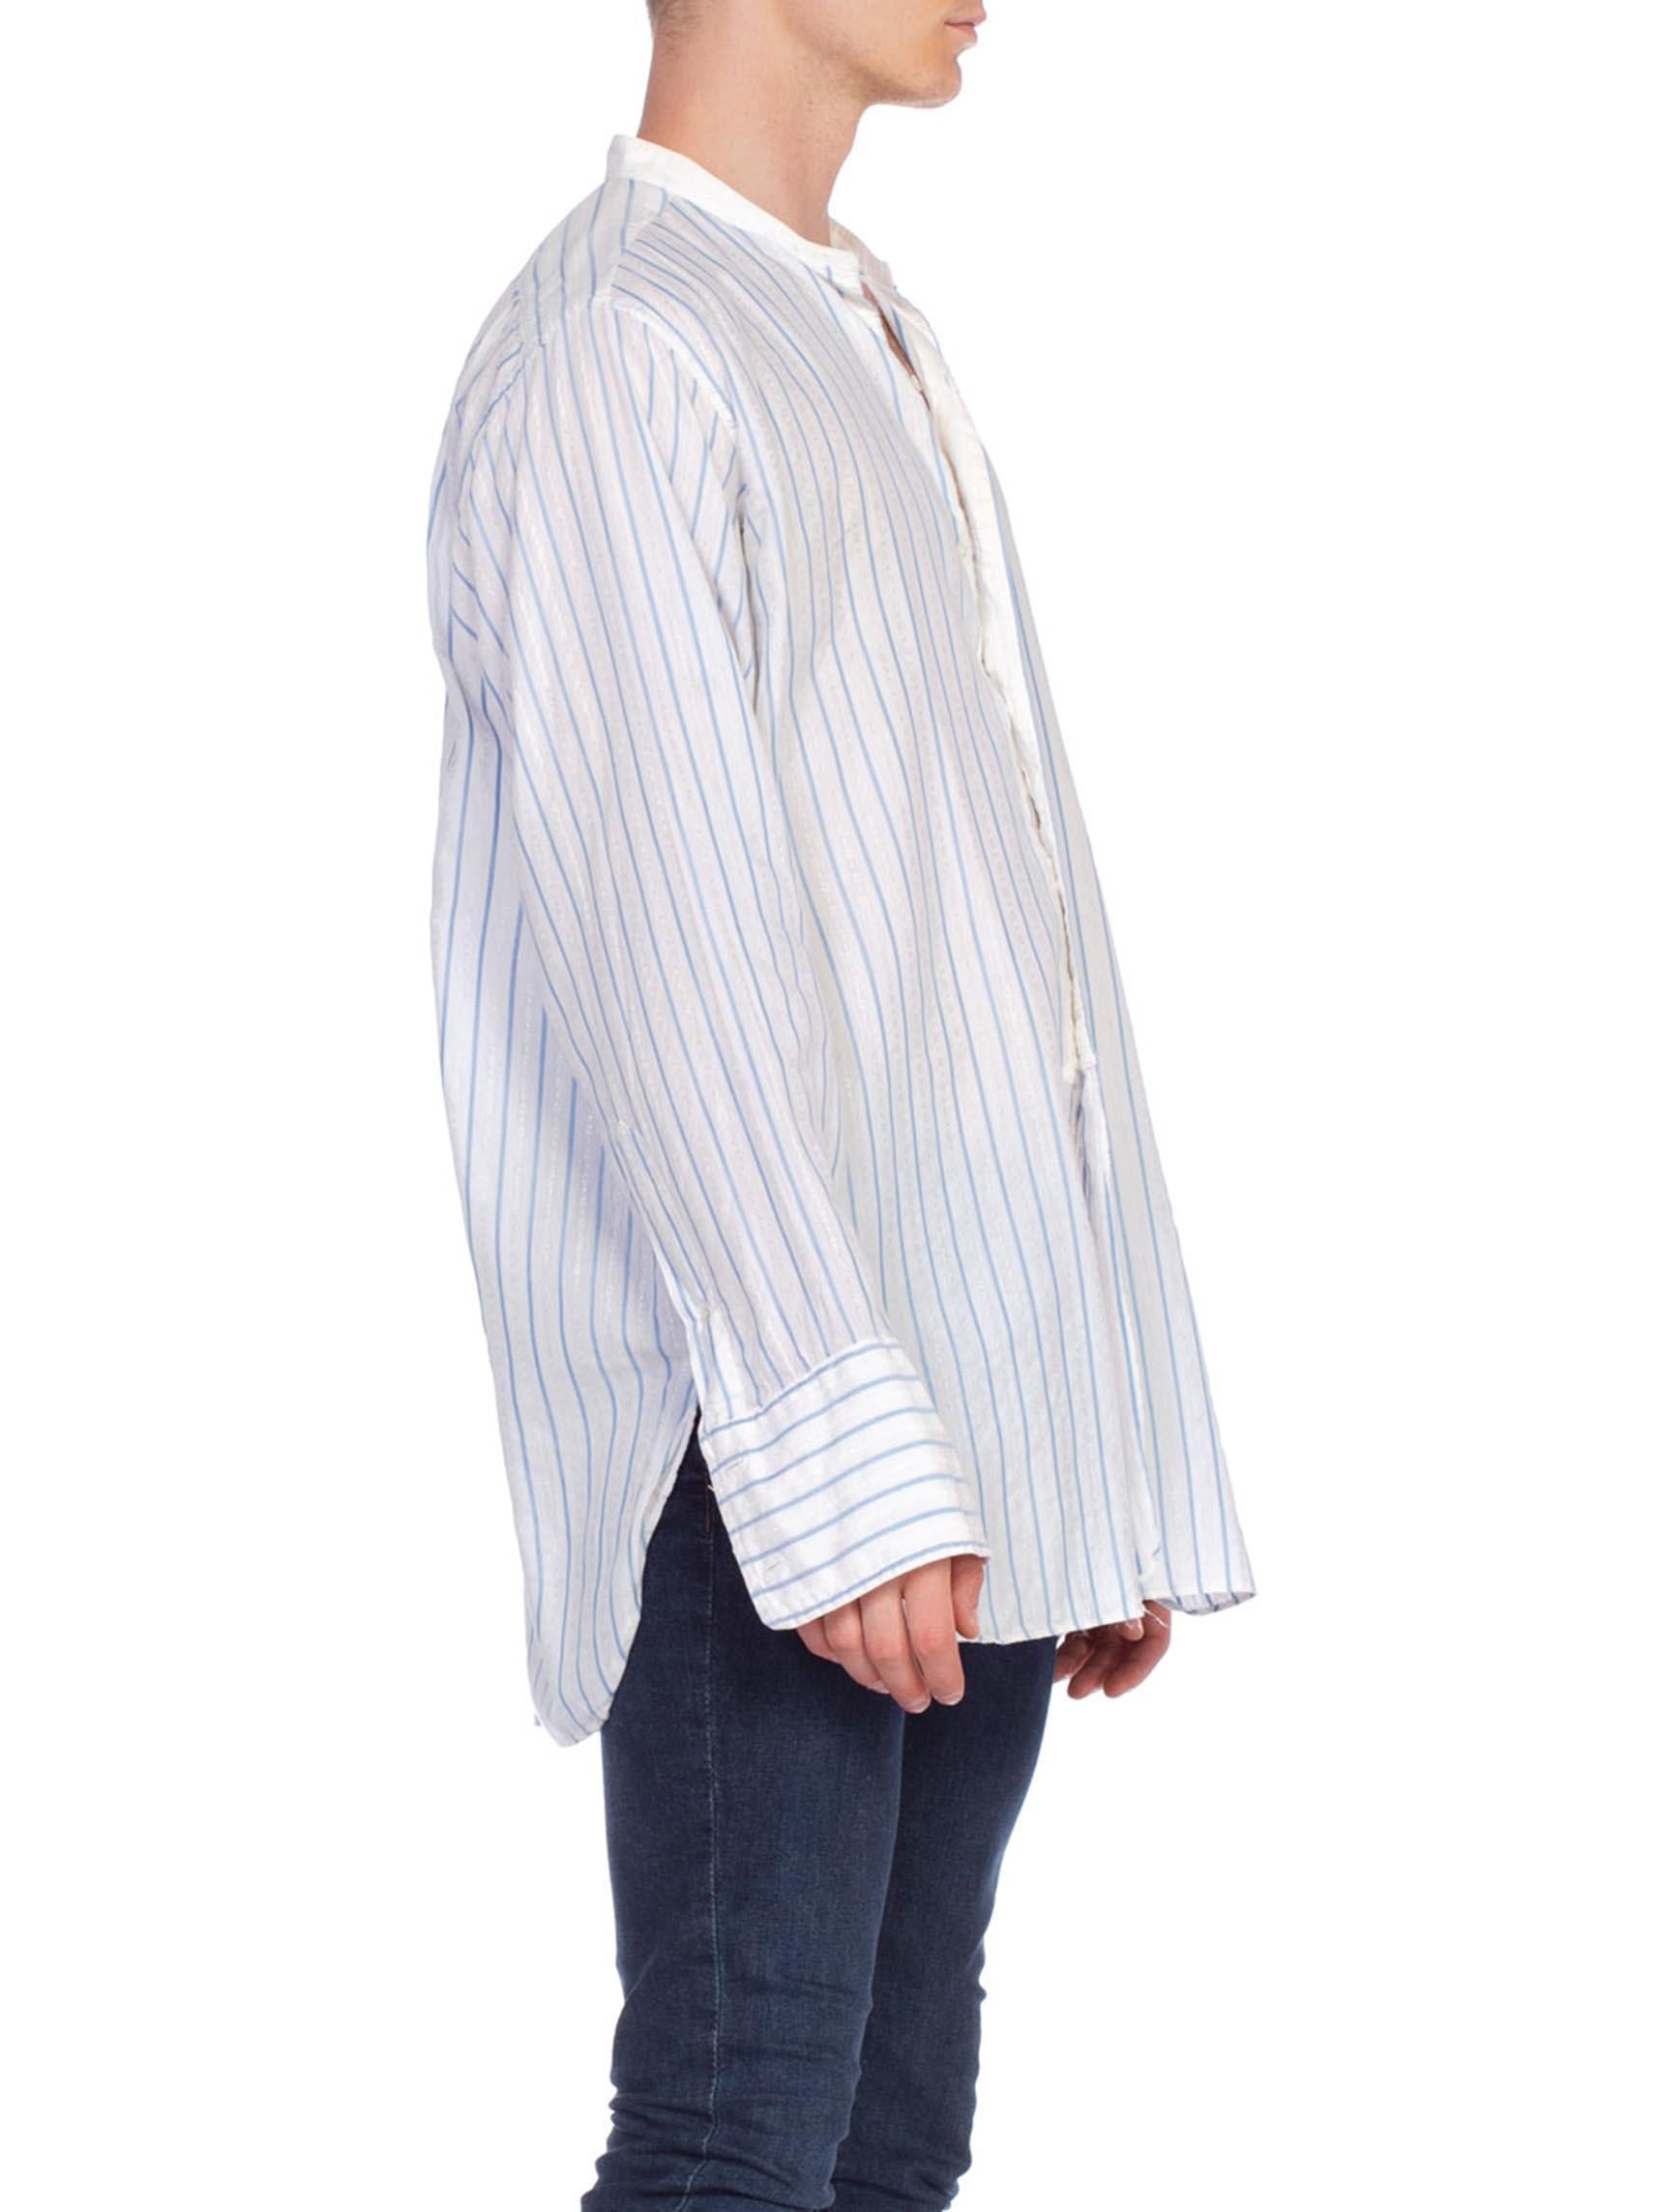 mens white pinstripe shirt